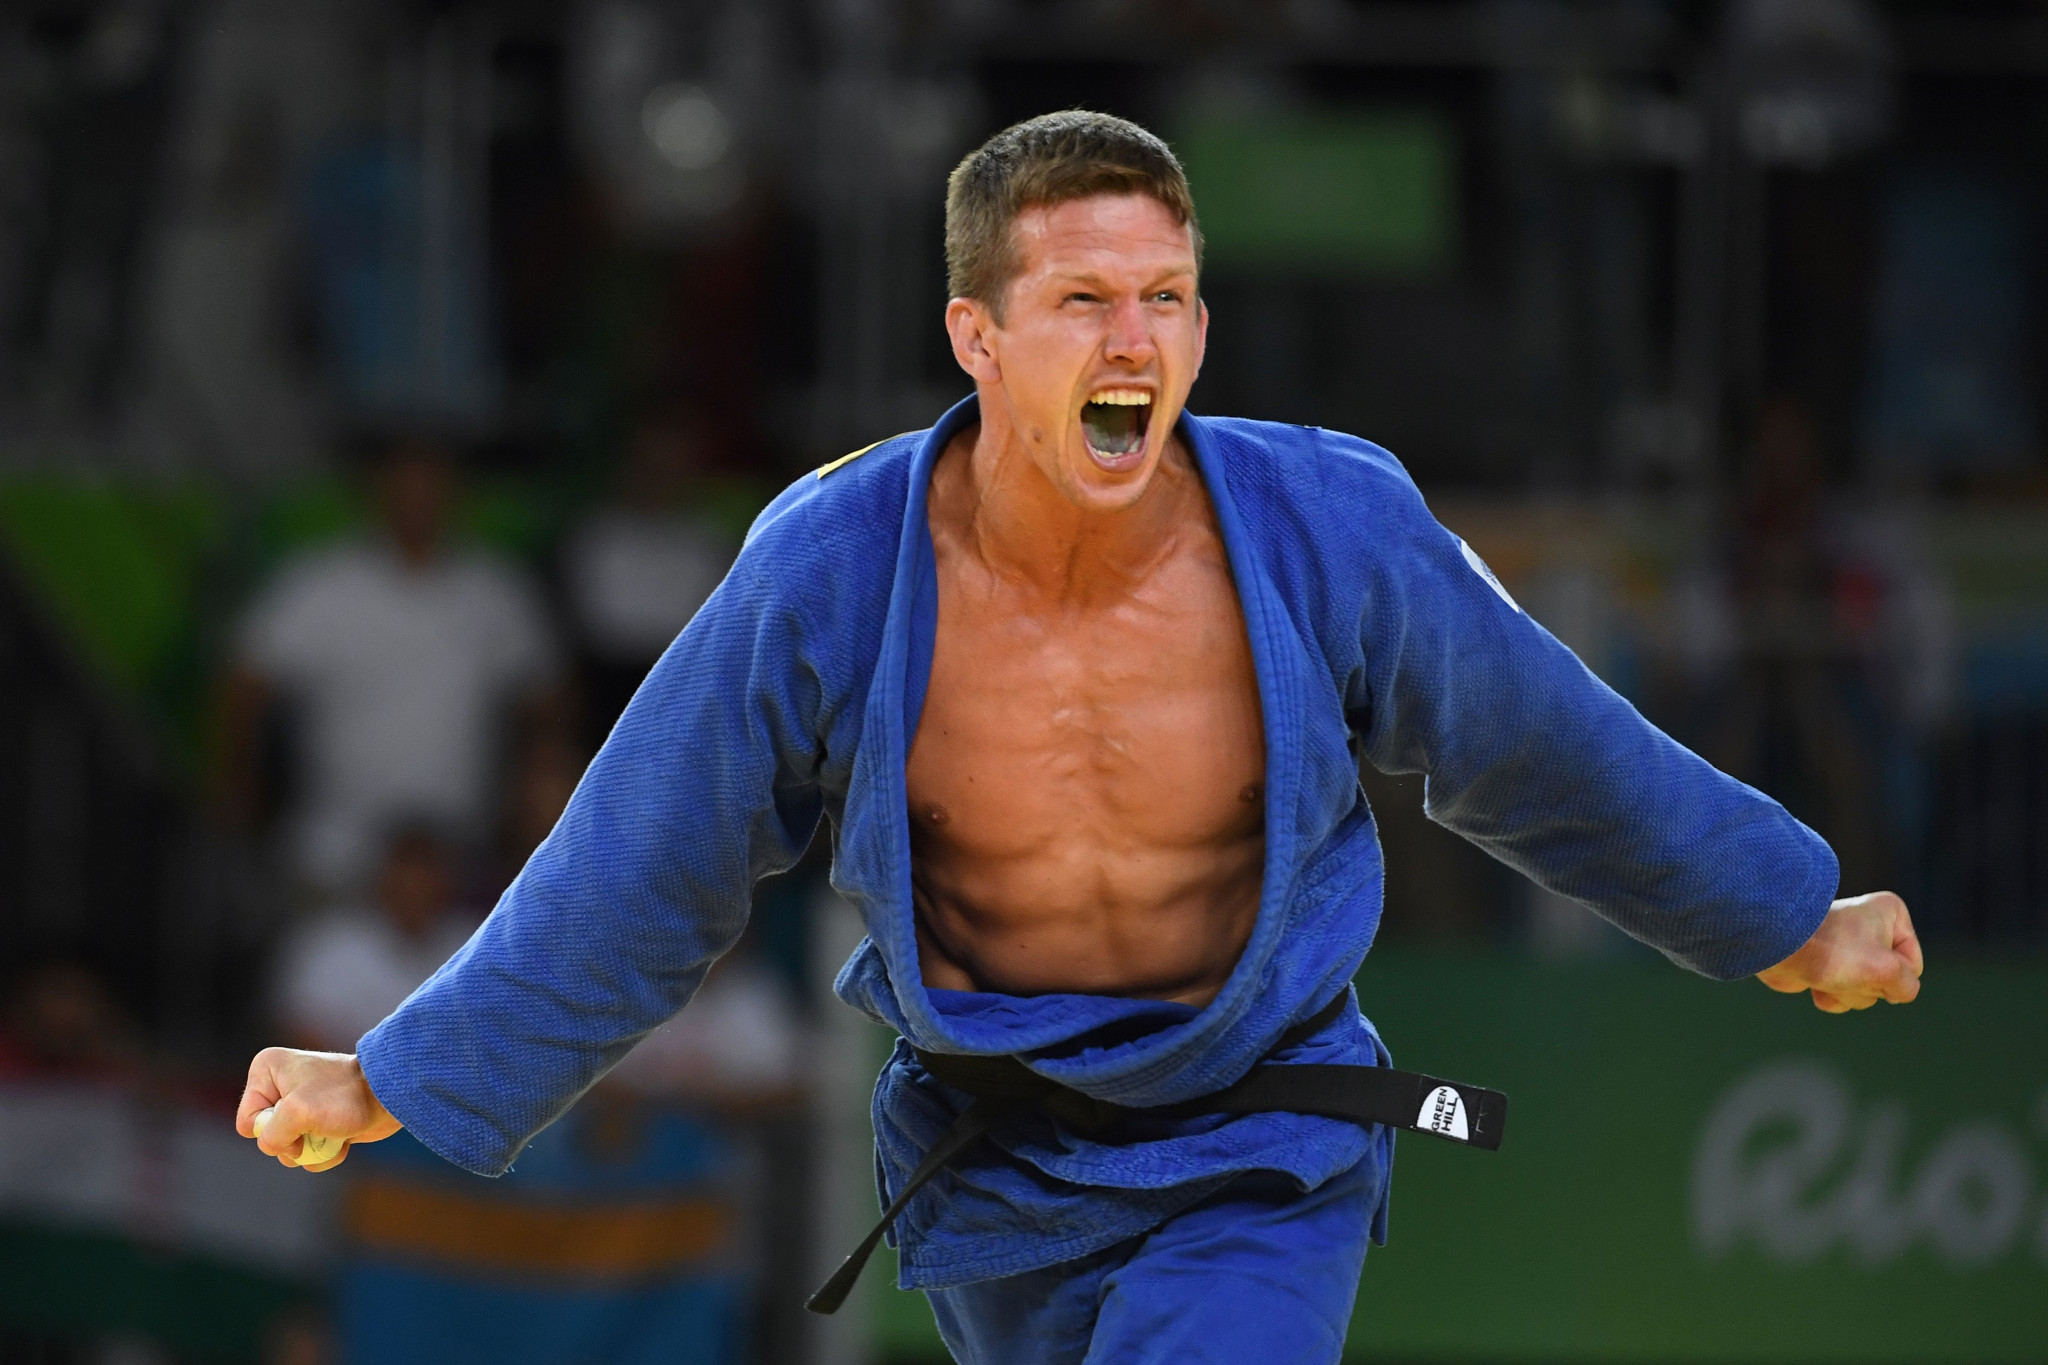 Olympic bronze medallist Van Tichelt retires from judo due to neck injury